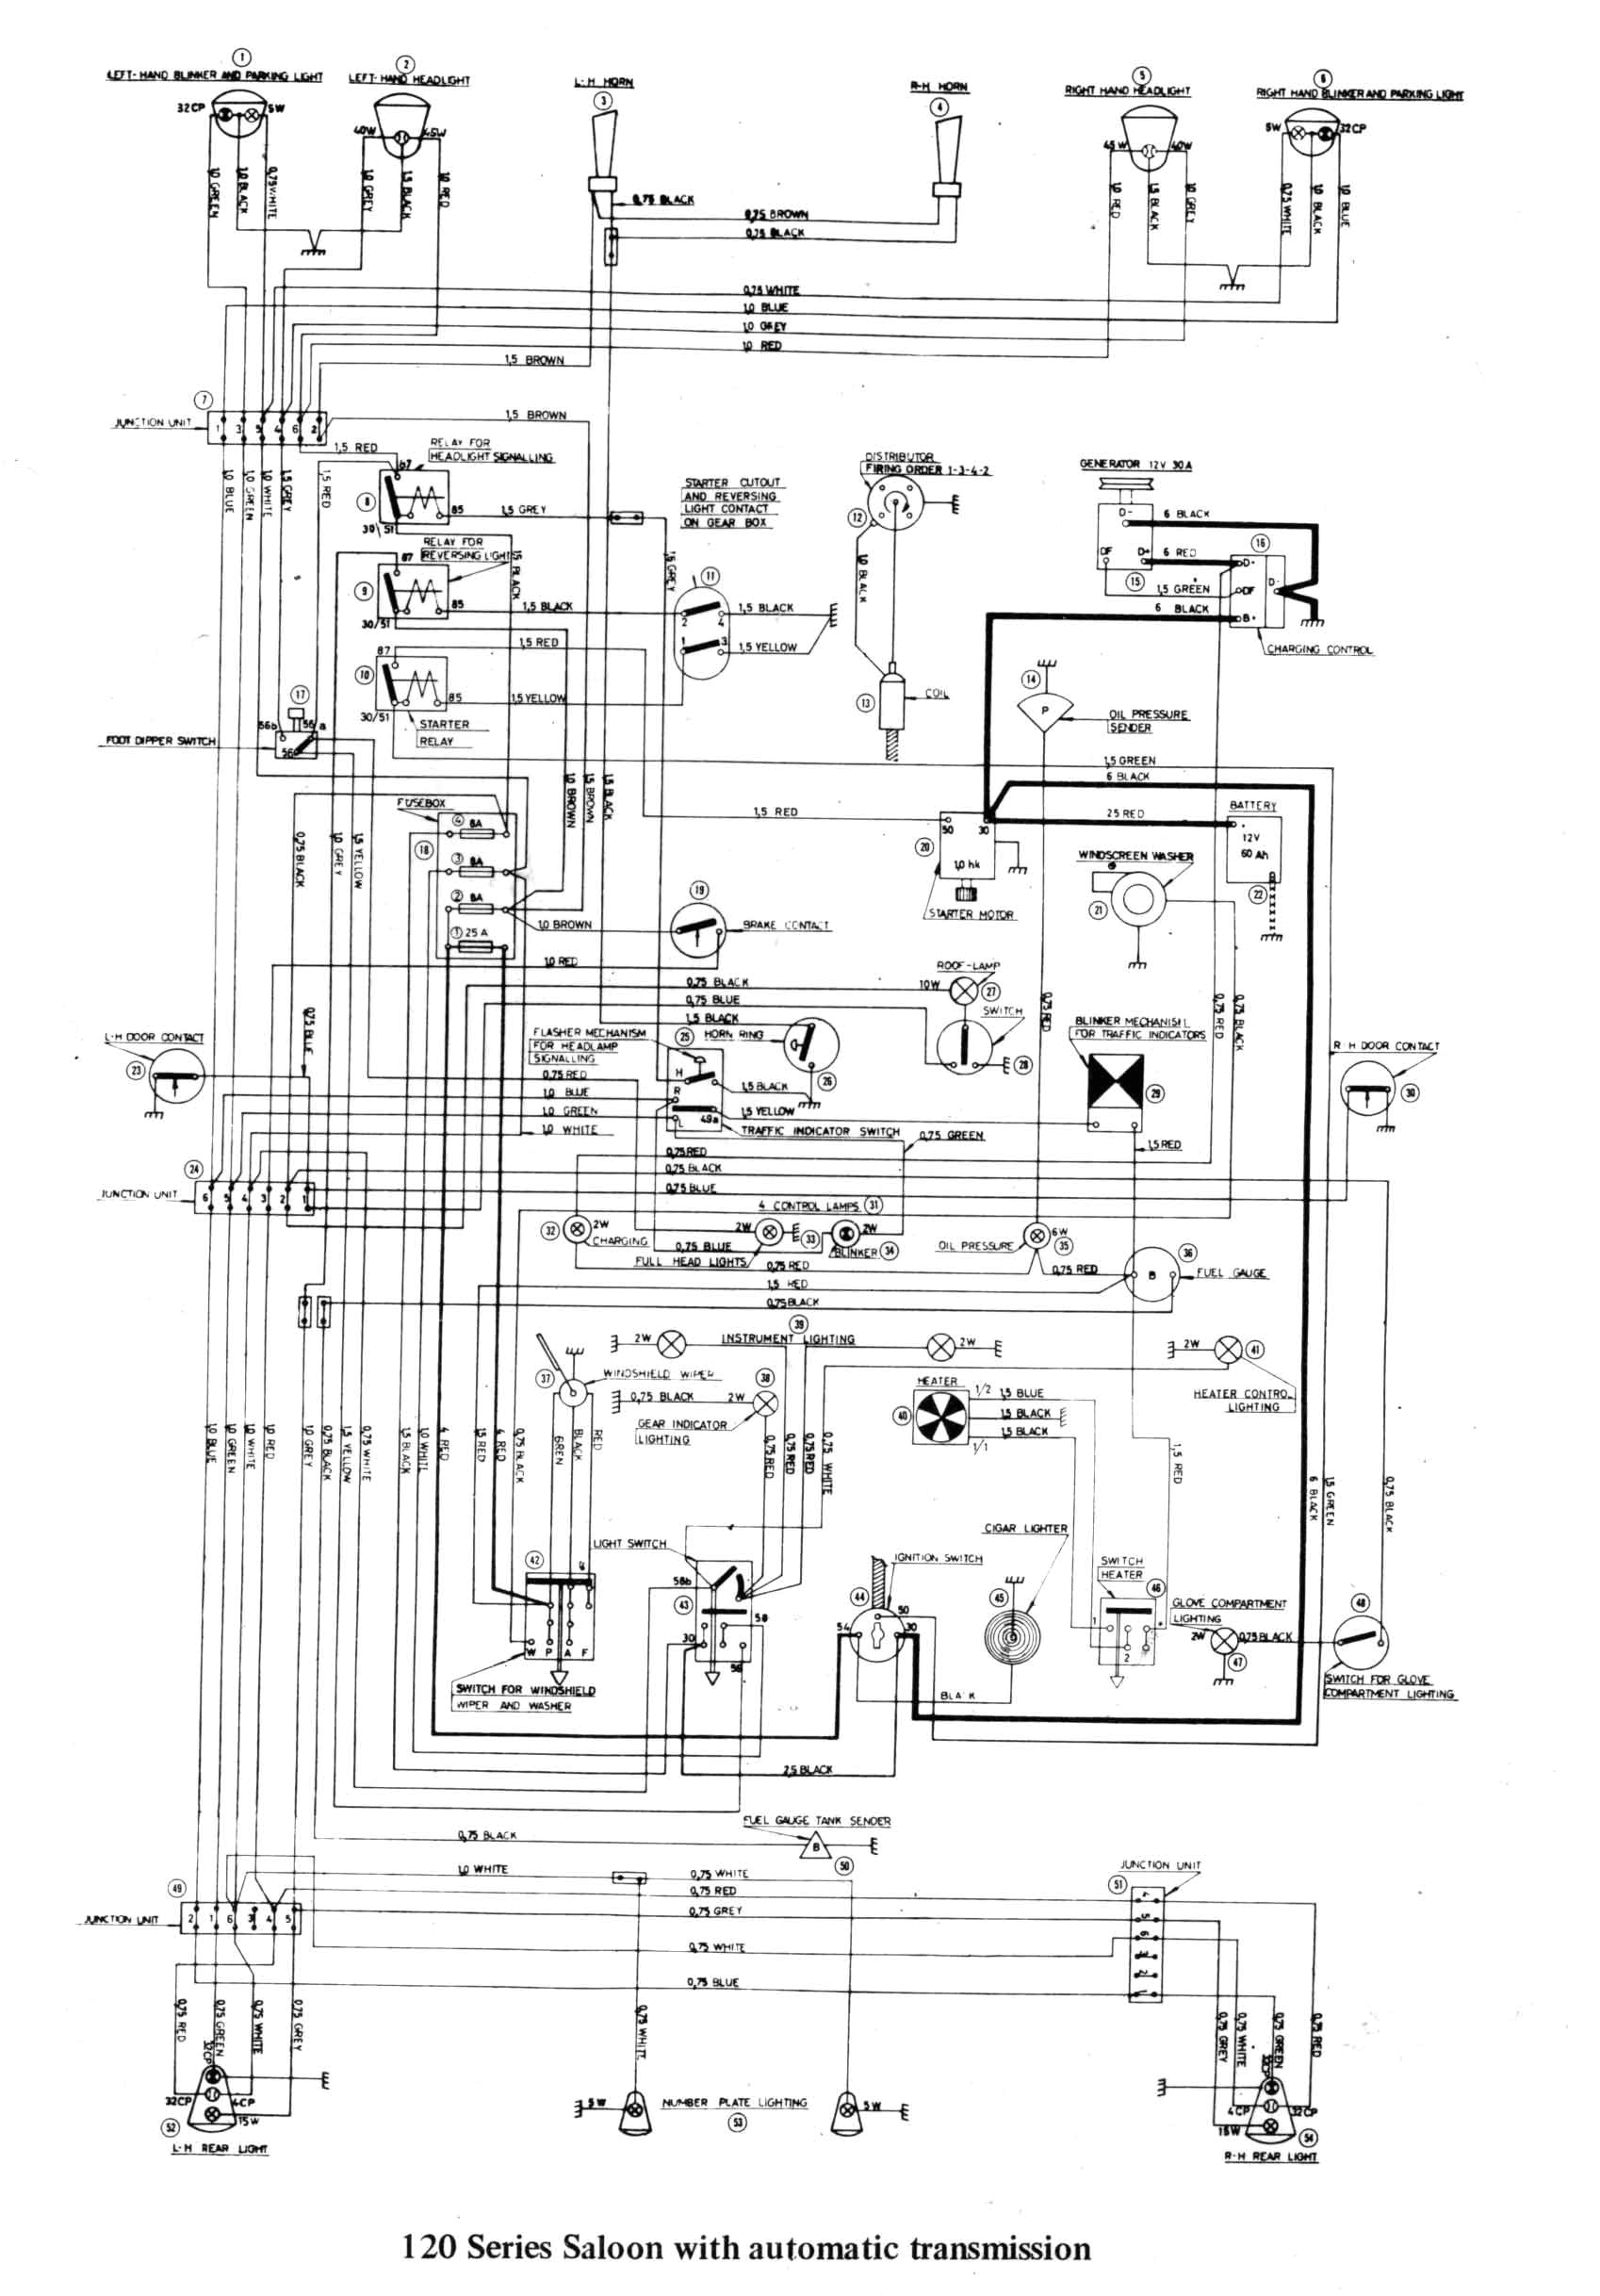 wiring diagram for 2004 volvo c70 wiring diagram toolbox volvo c70 wiring diagrams 2004 volvo c70